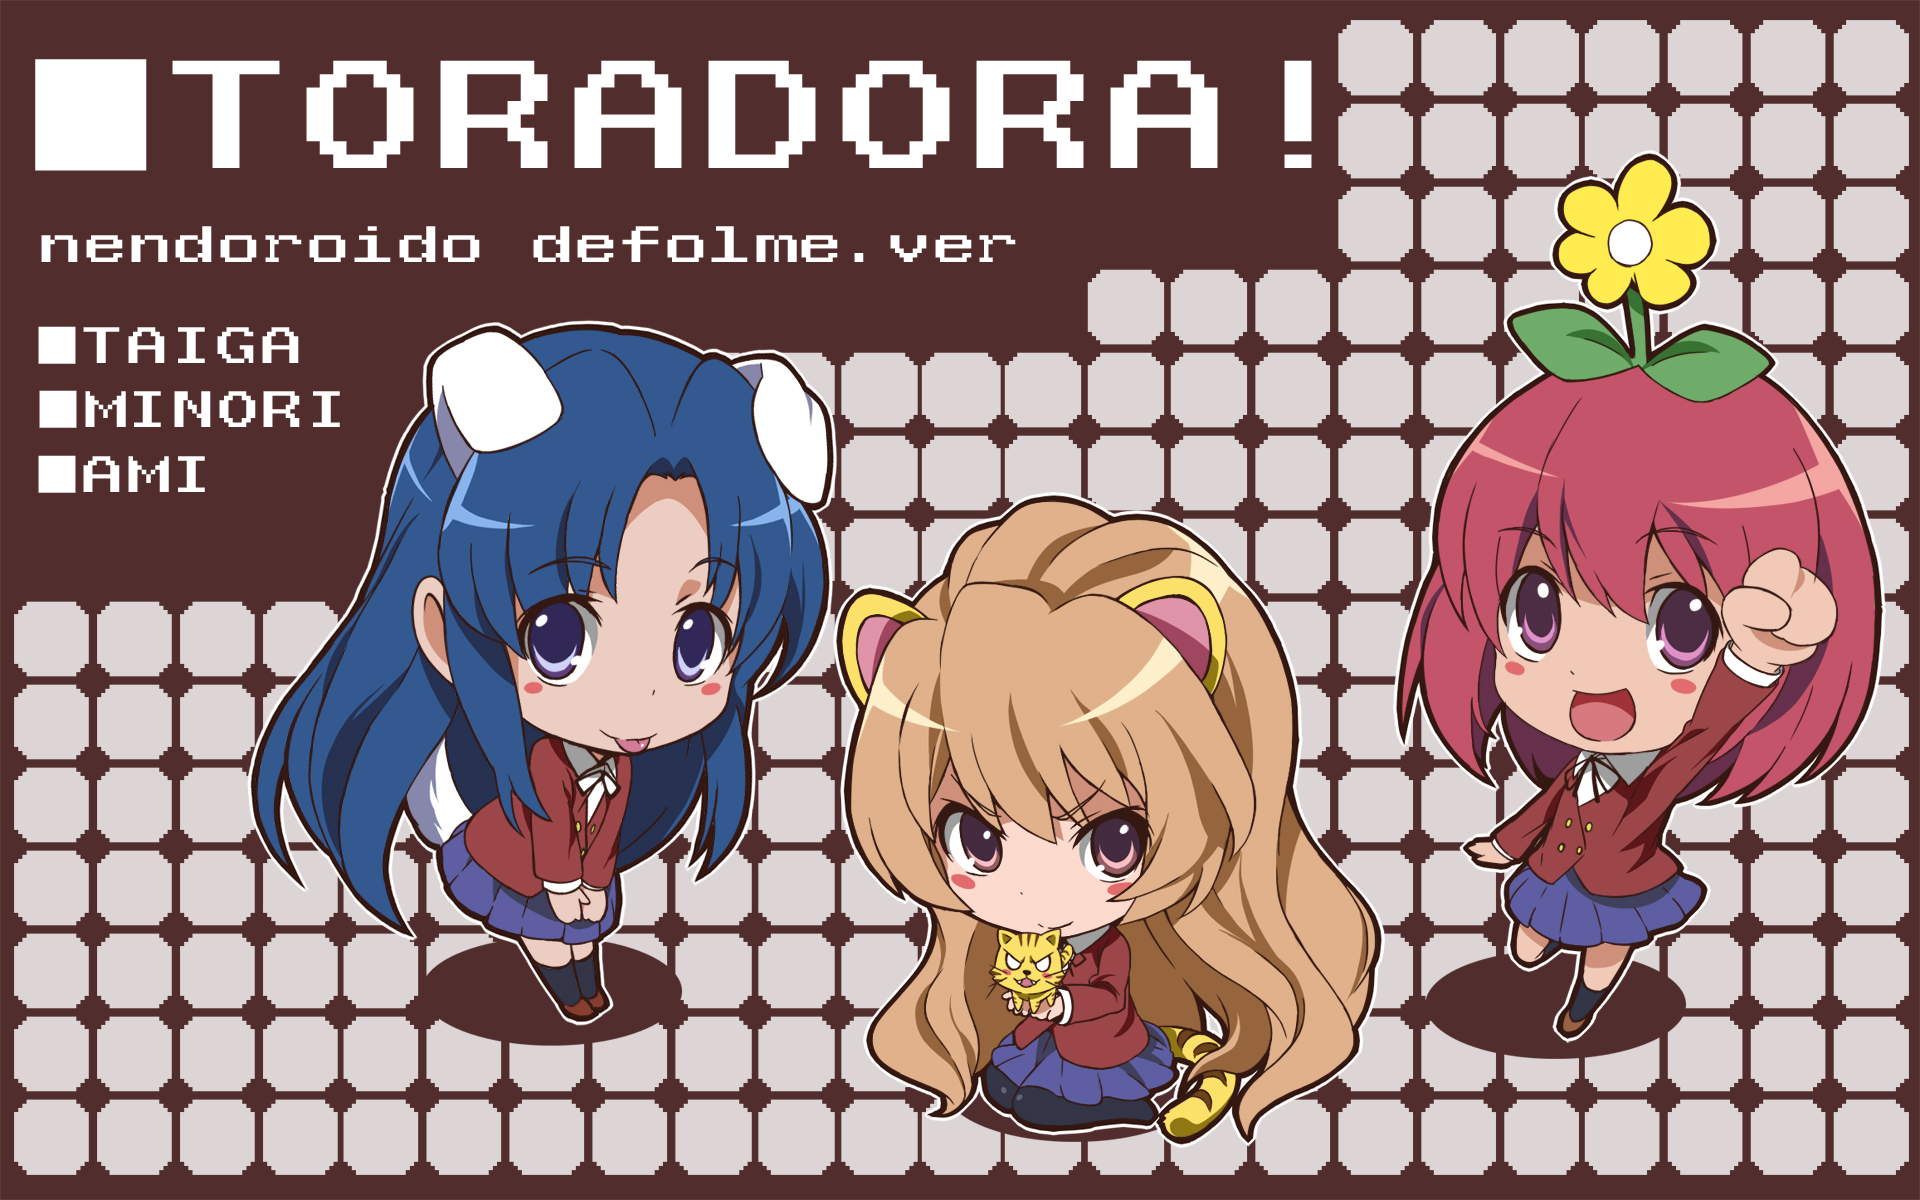 Vibrant Anime wallpaper featuring Toradora characters.